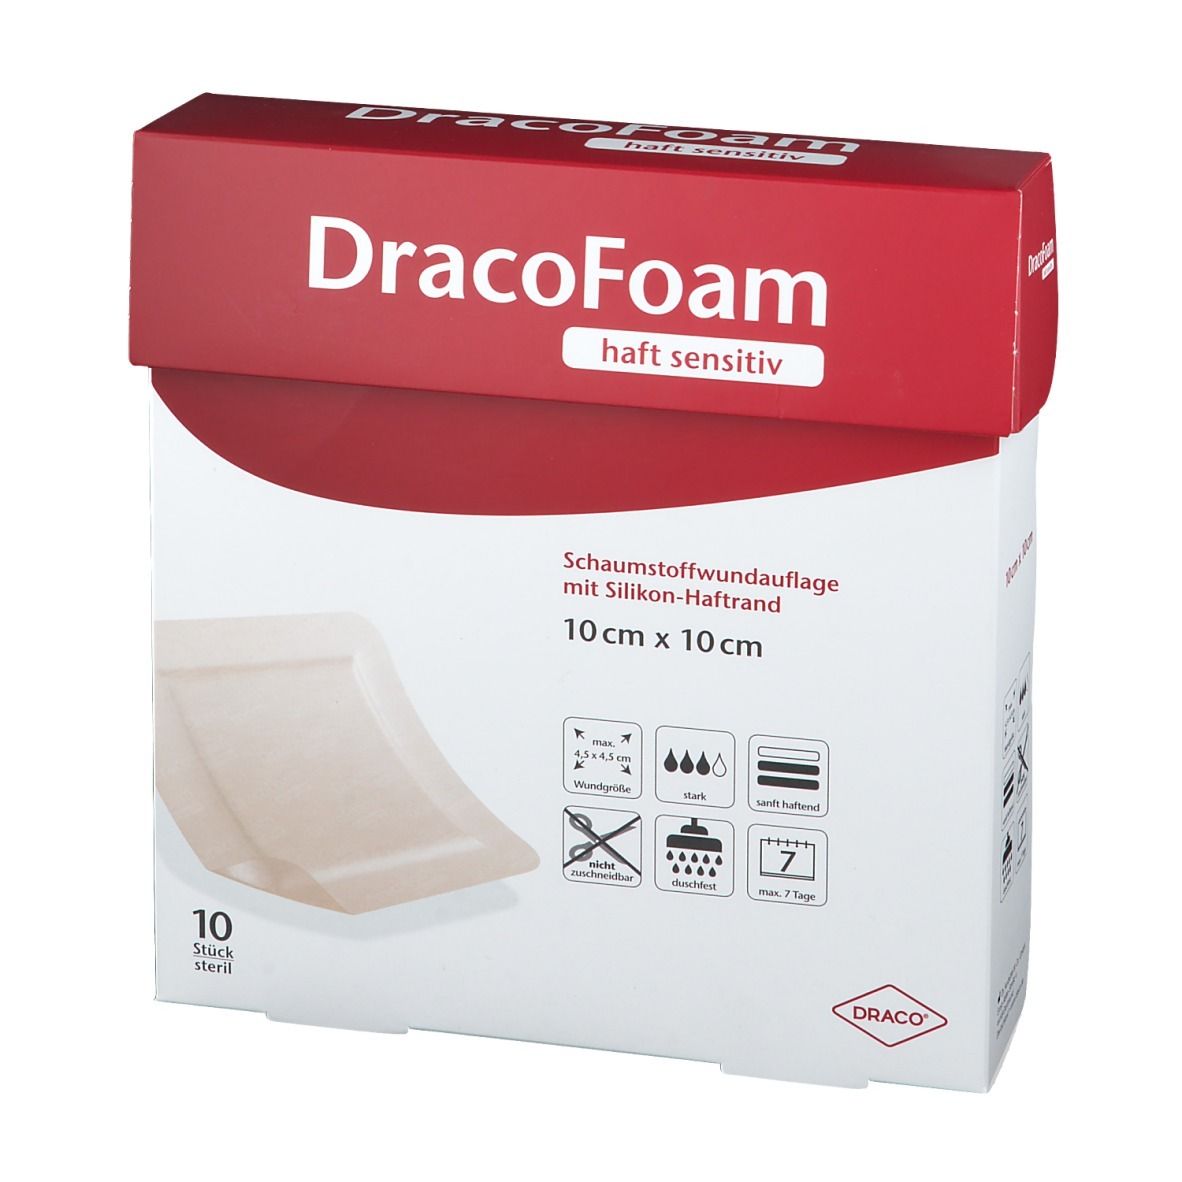 DracoFoam haft sensitive 10 x 10 cm